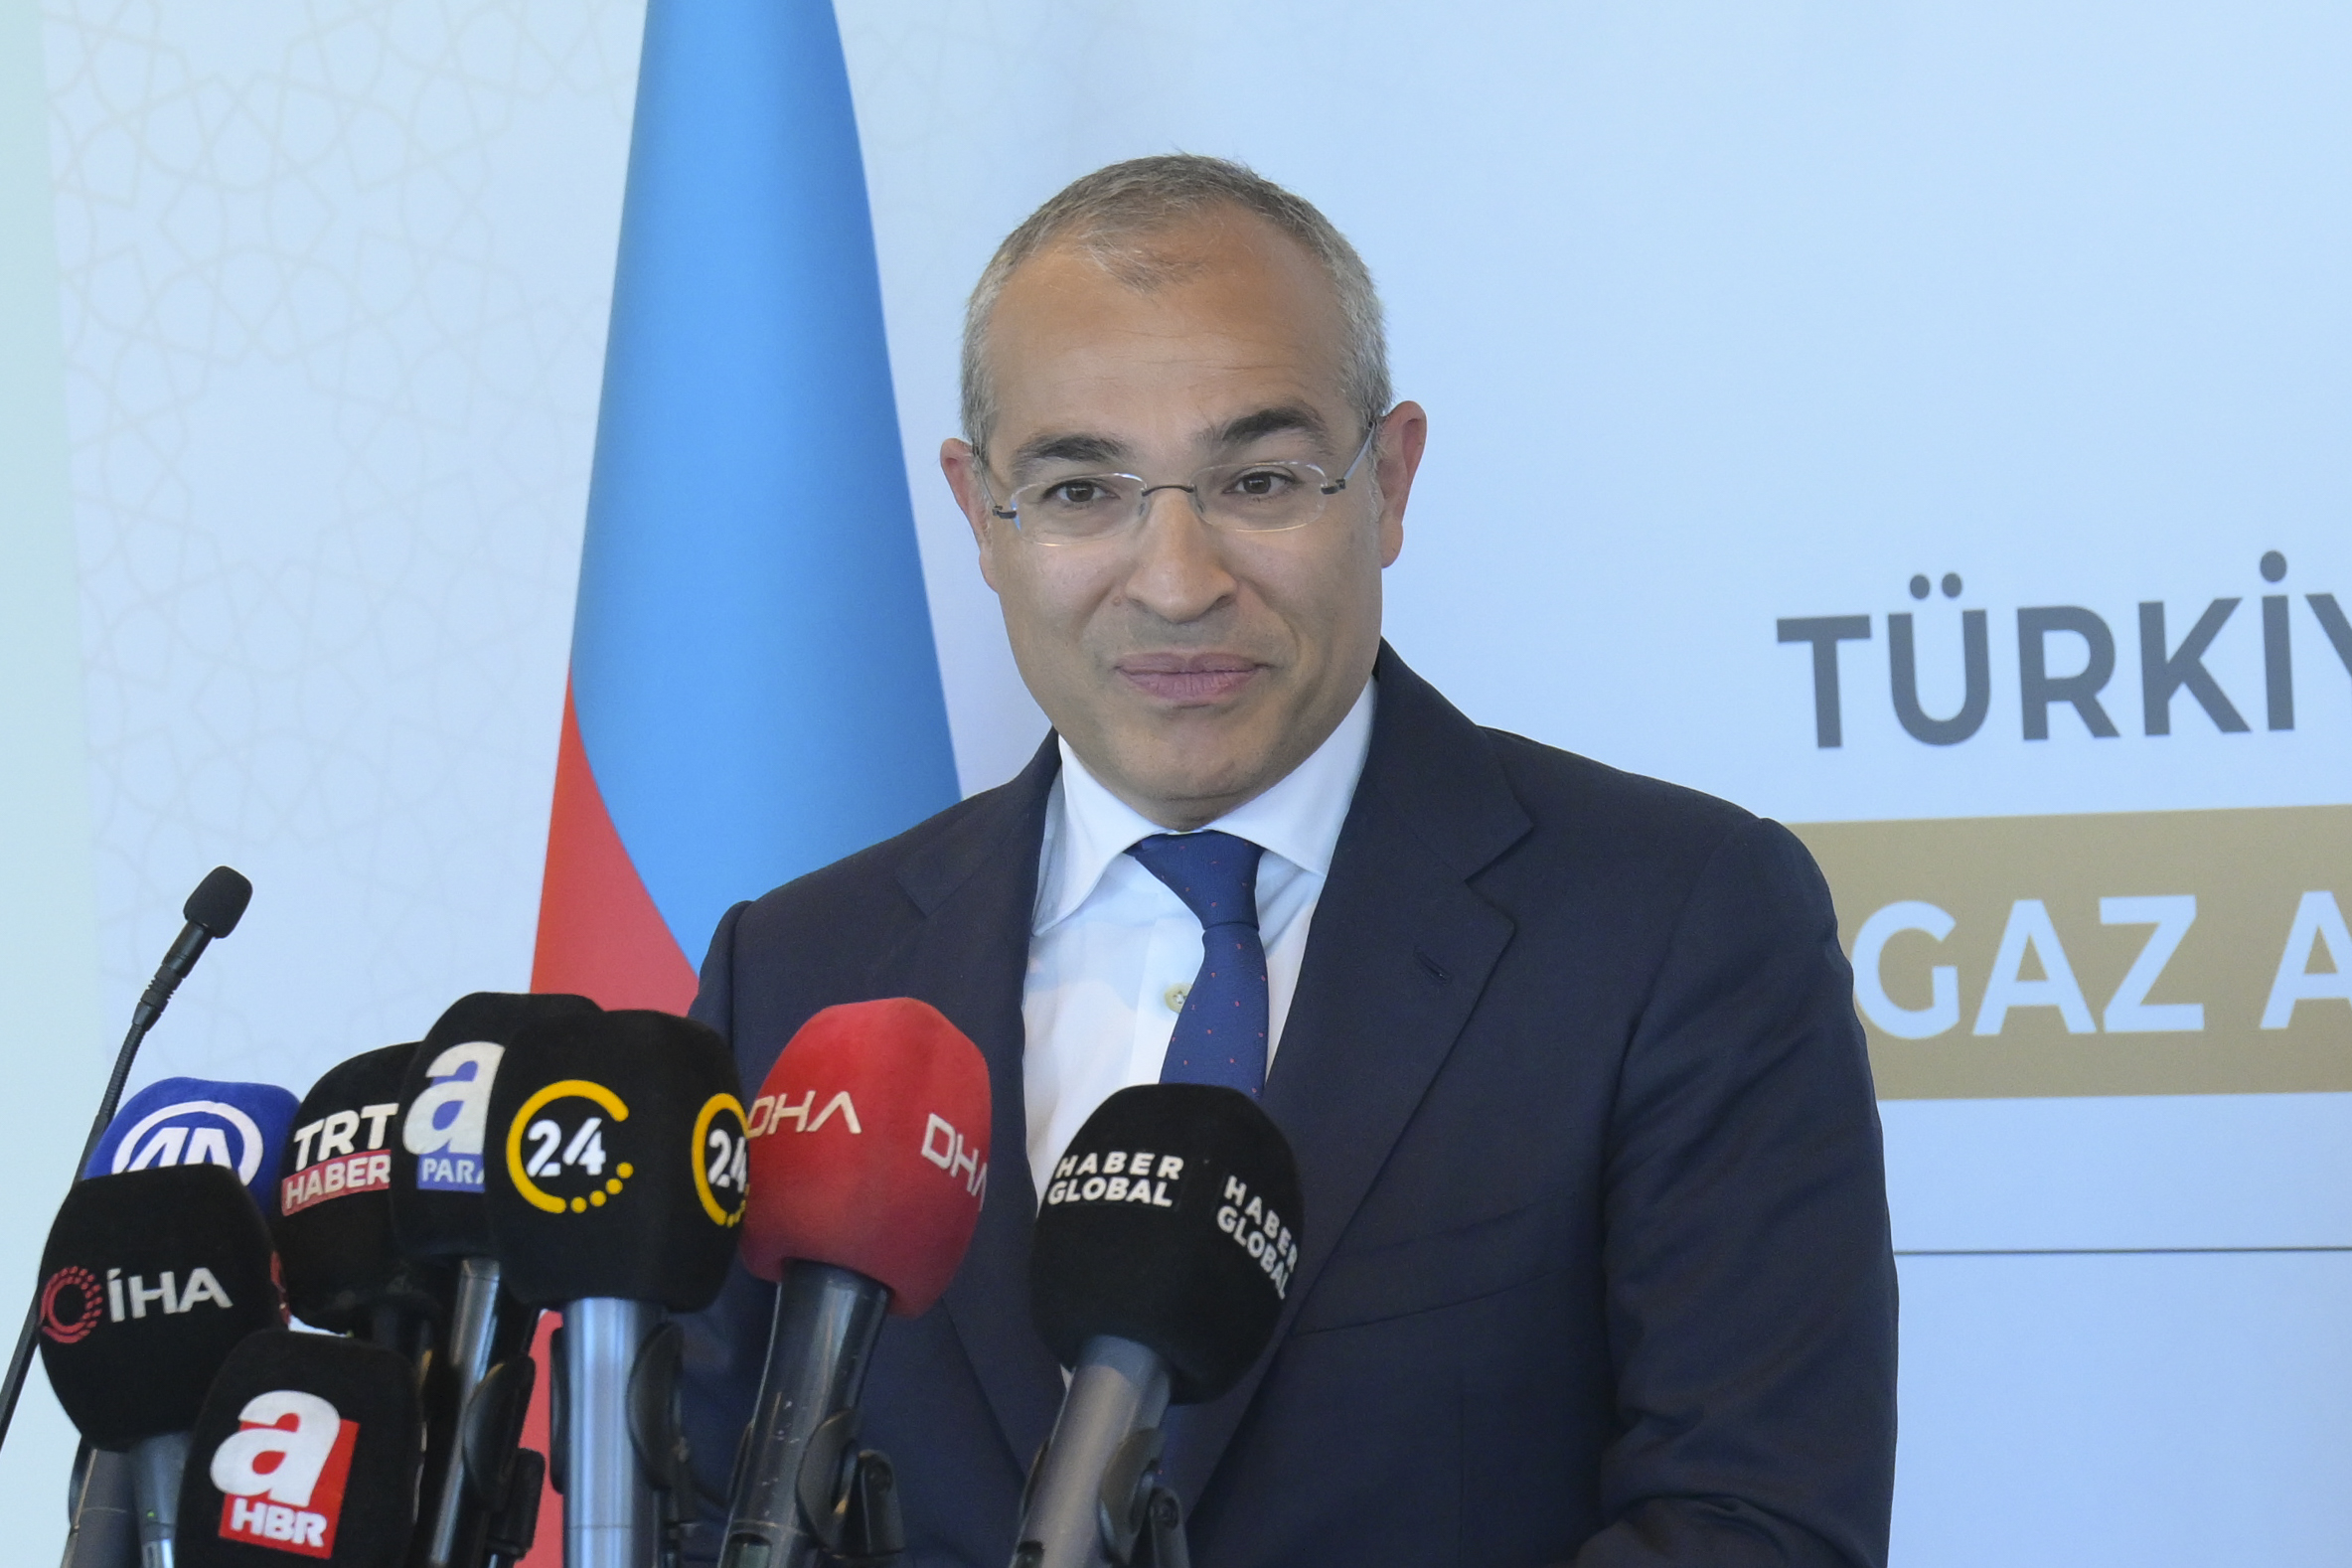 Türkiye, Azerbaijan strengthen natural gas cooperation with new agreement